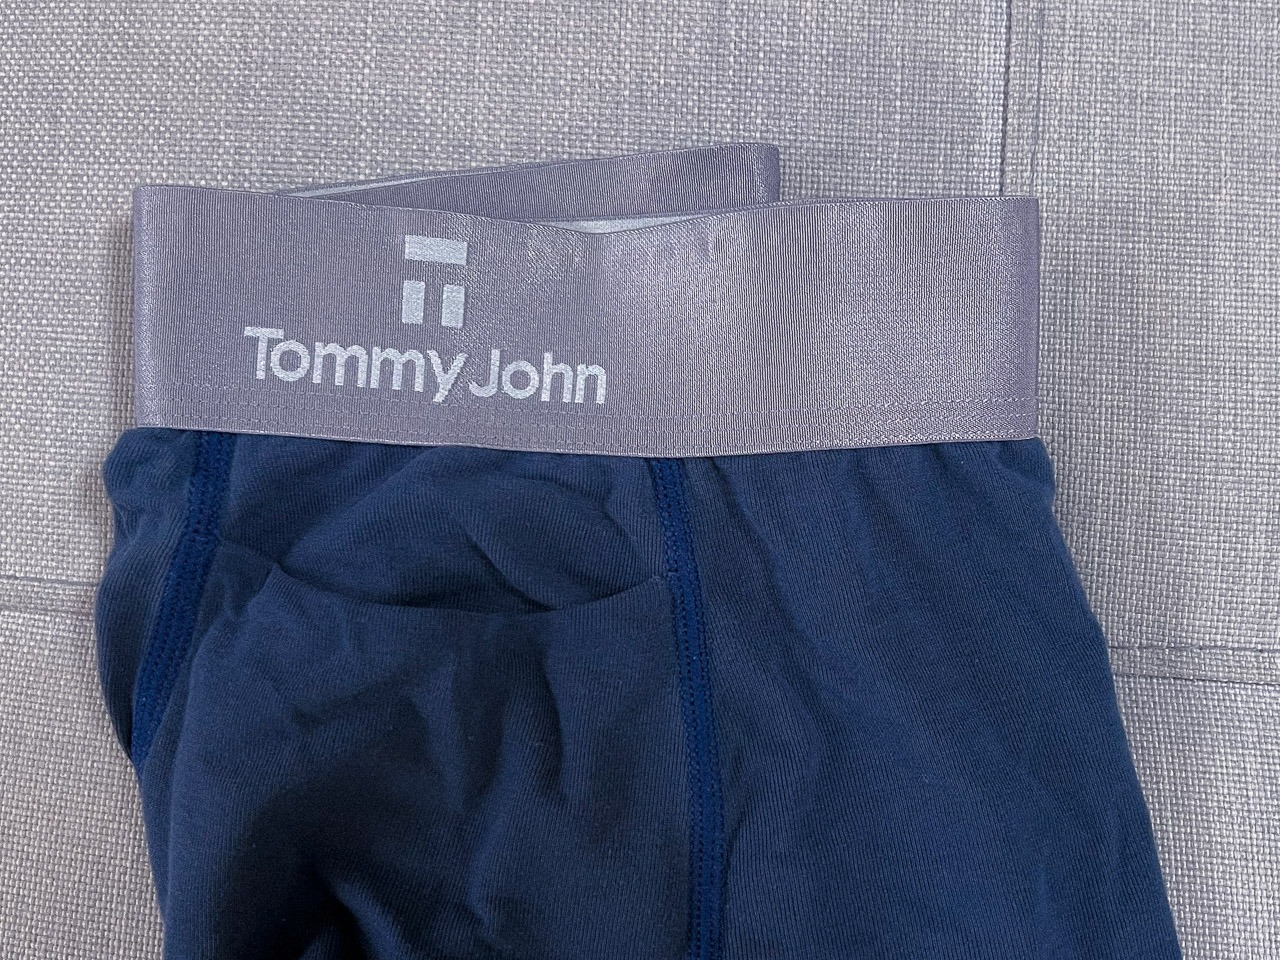 tommy john titanium second skin boxer brief